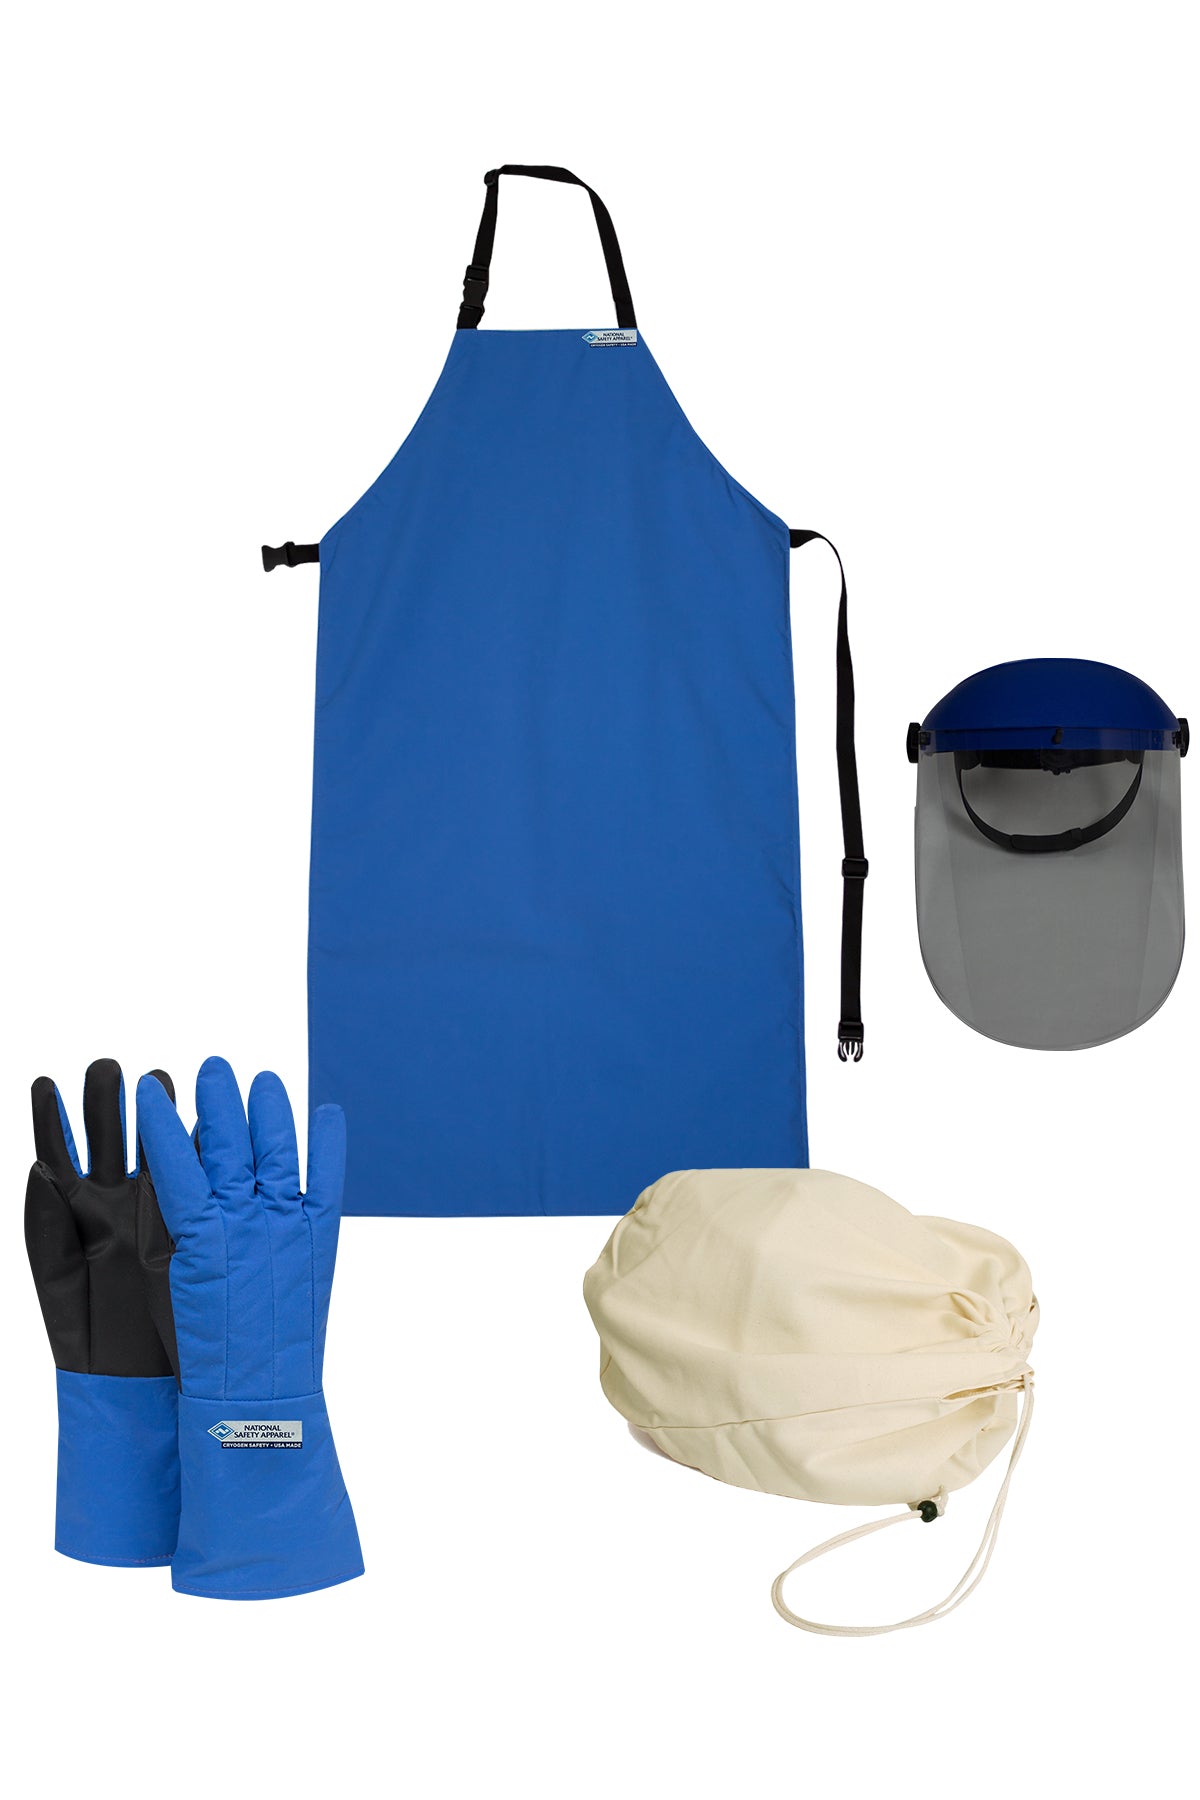 SaferGrip Mid-Arm Length Cryogenic Glove Kit